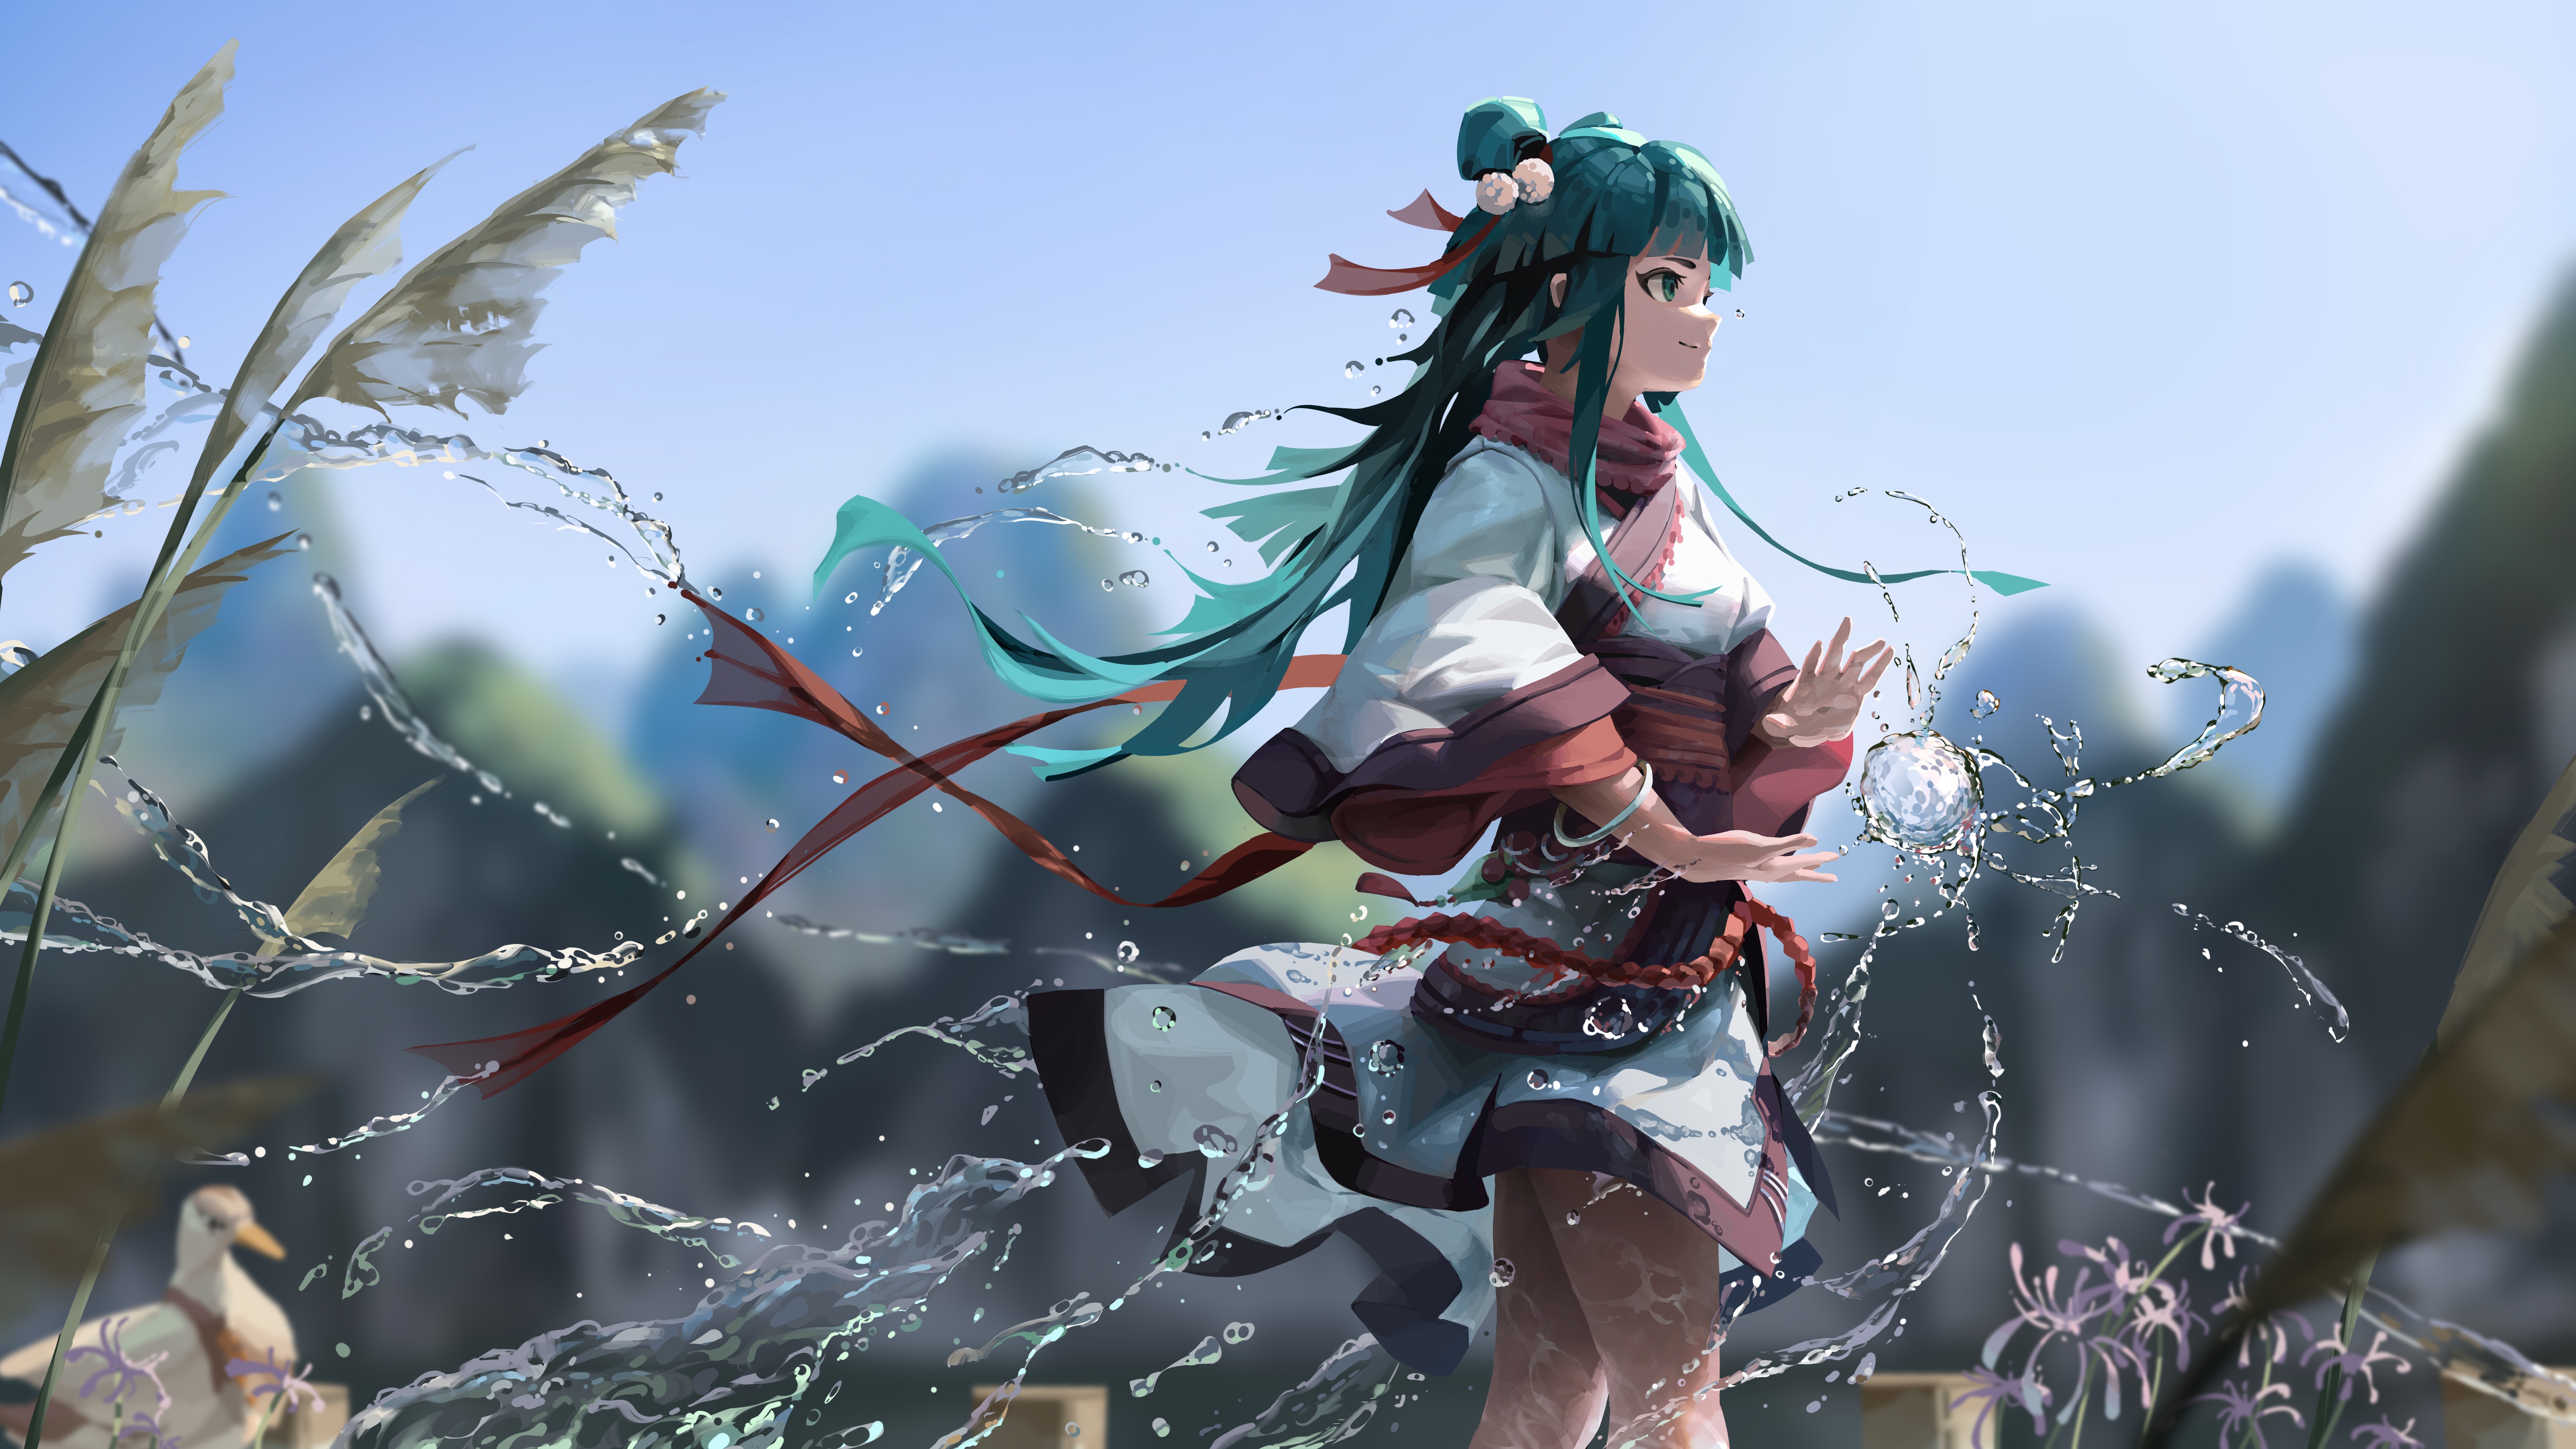 Digital Art Artwork Illustration Women Fantasy Art Fantasy Girl Water Blurred Kan Liu 7680x4320